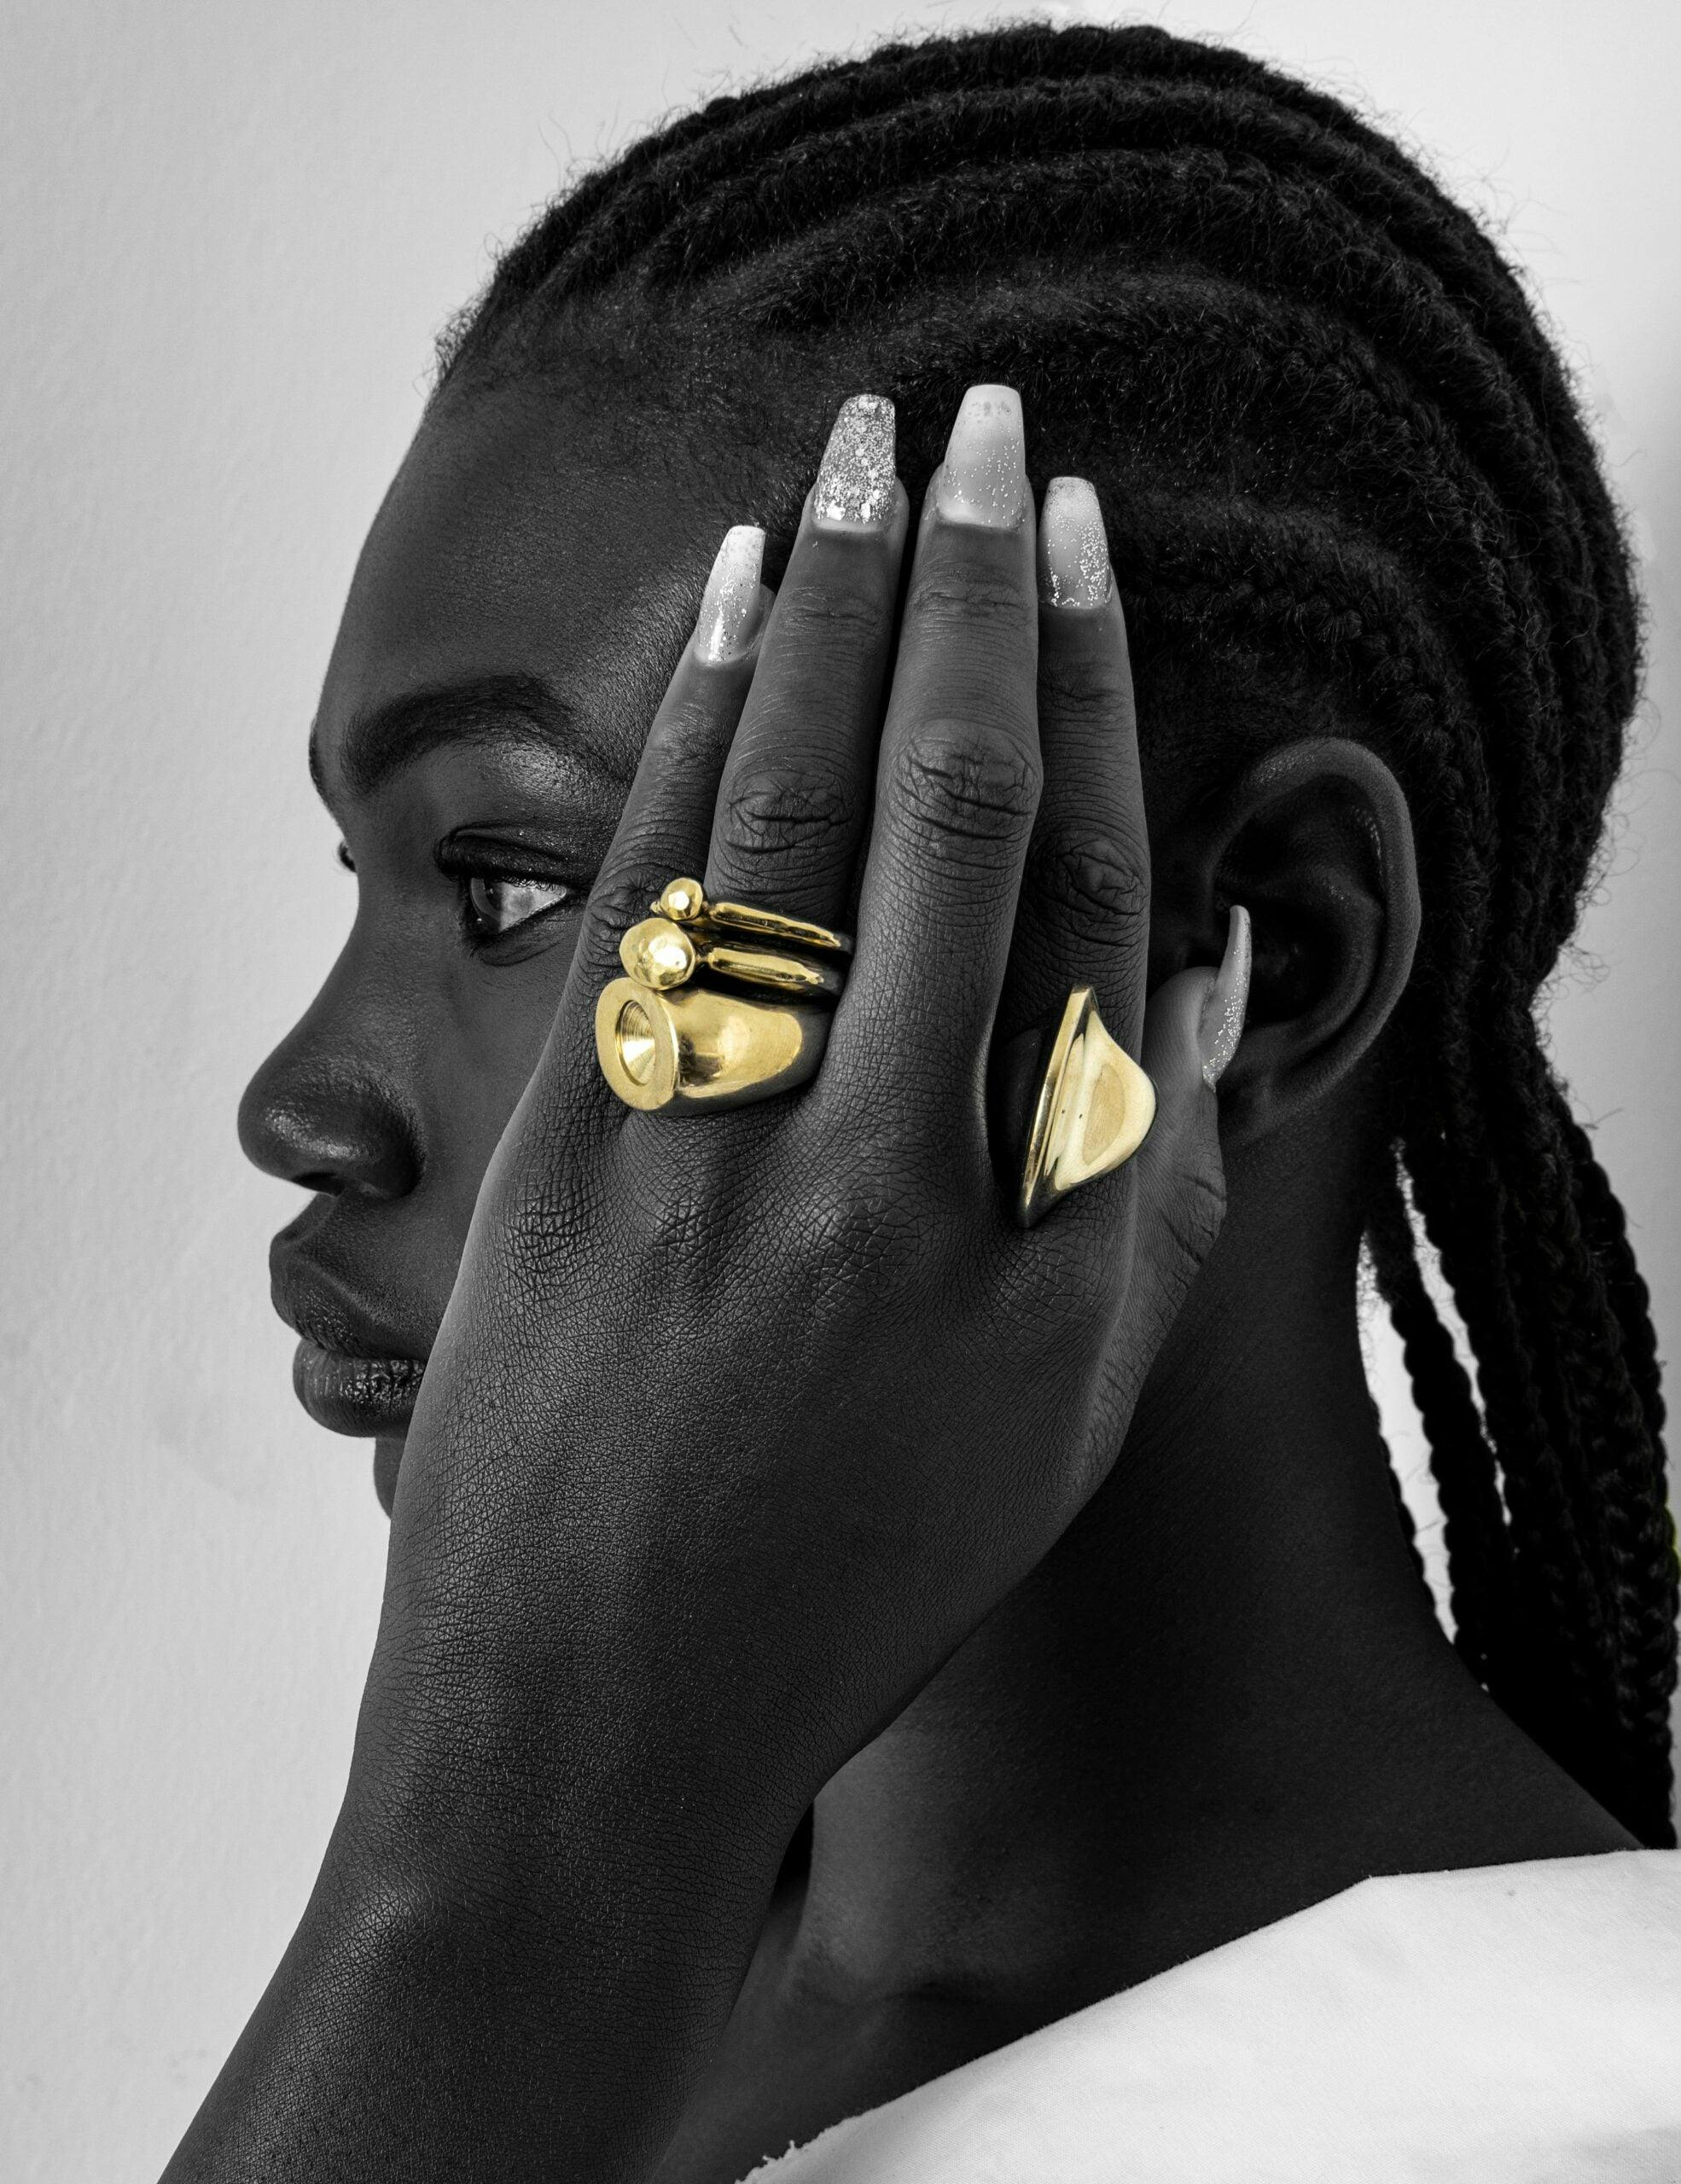 Kojika Brass Ring, a product by Adele Dejak